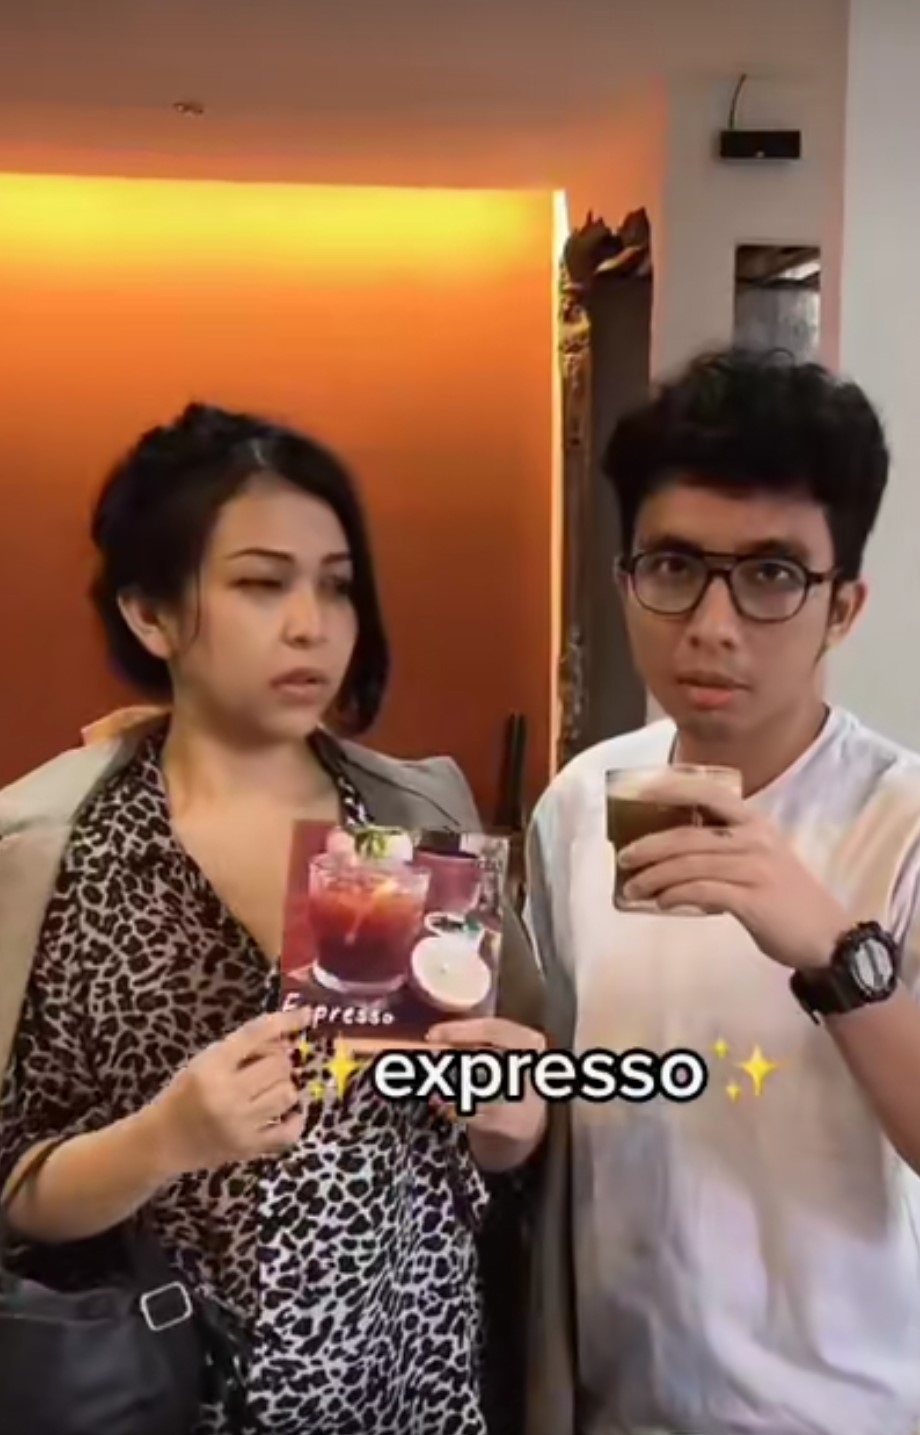 Kedai Kopi Ini Jadikan 'Expresso' Menu Terbaru, Netizen: Blunder!